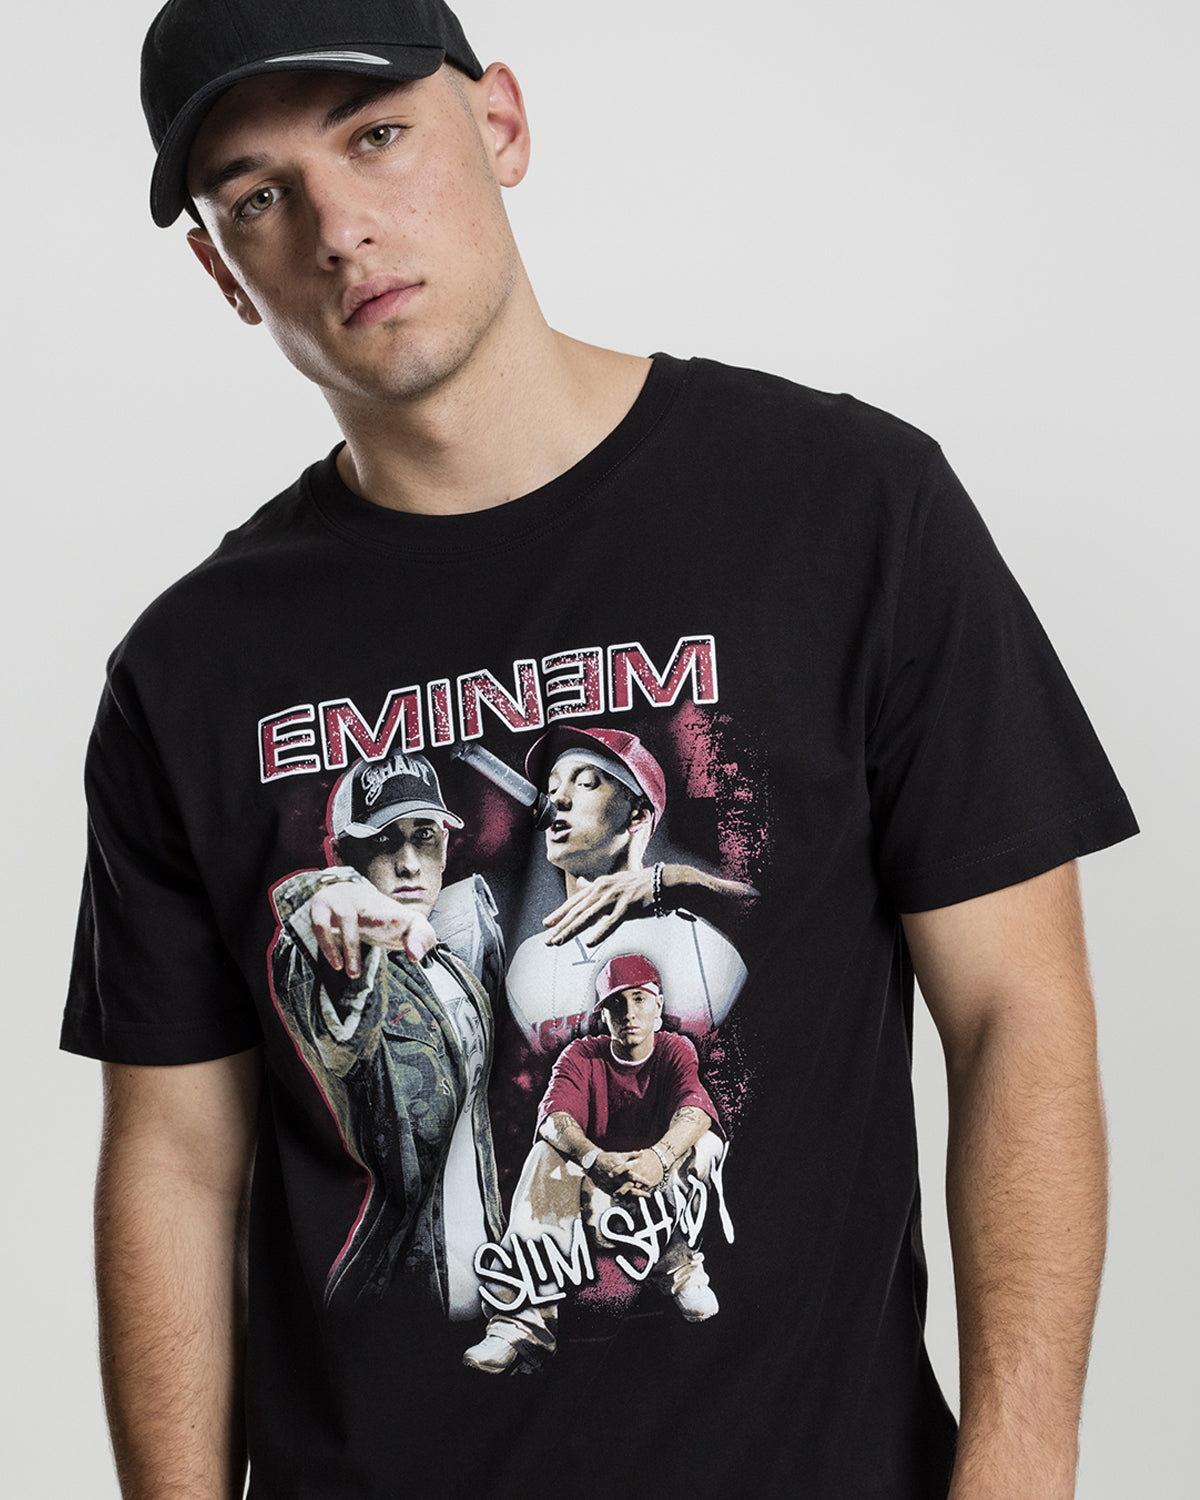 Urban Classics Eminem Slim Shady t-paita - Musta